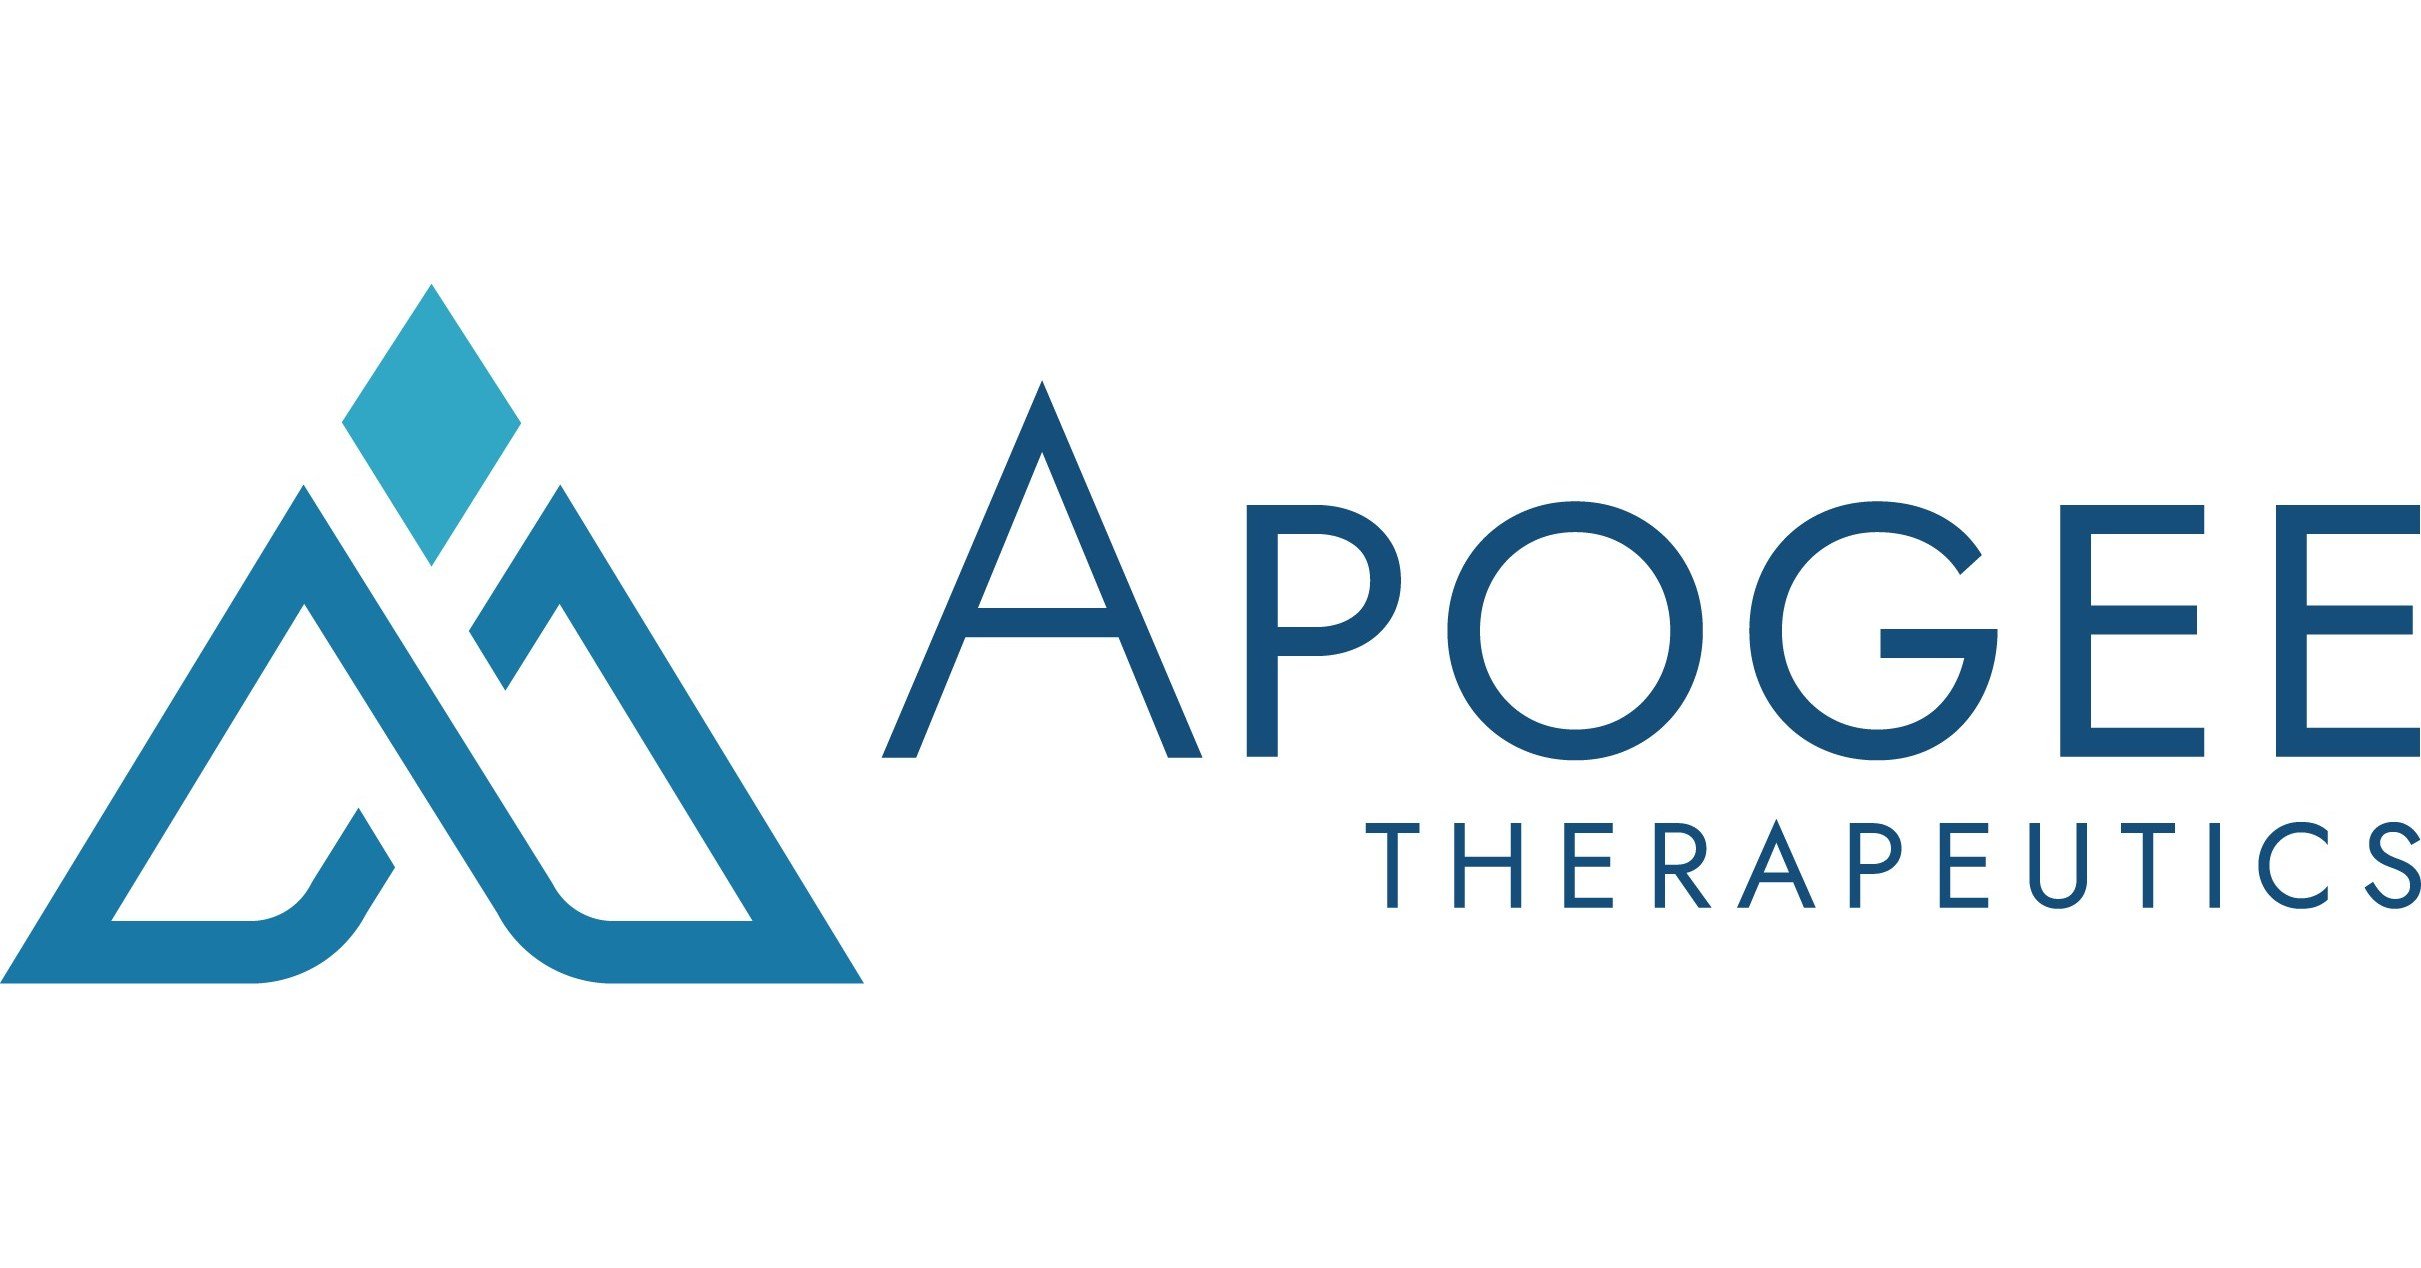 CFO at Apogee Therapeutics